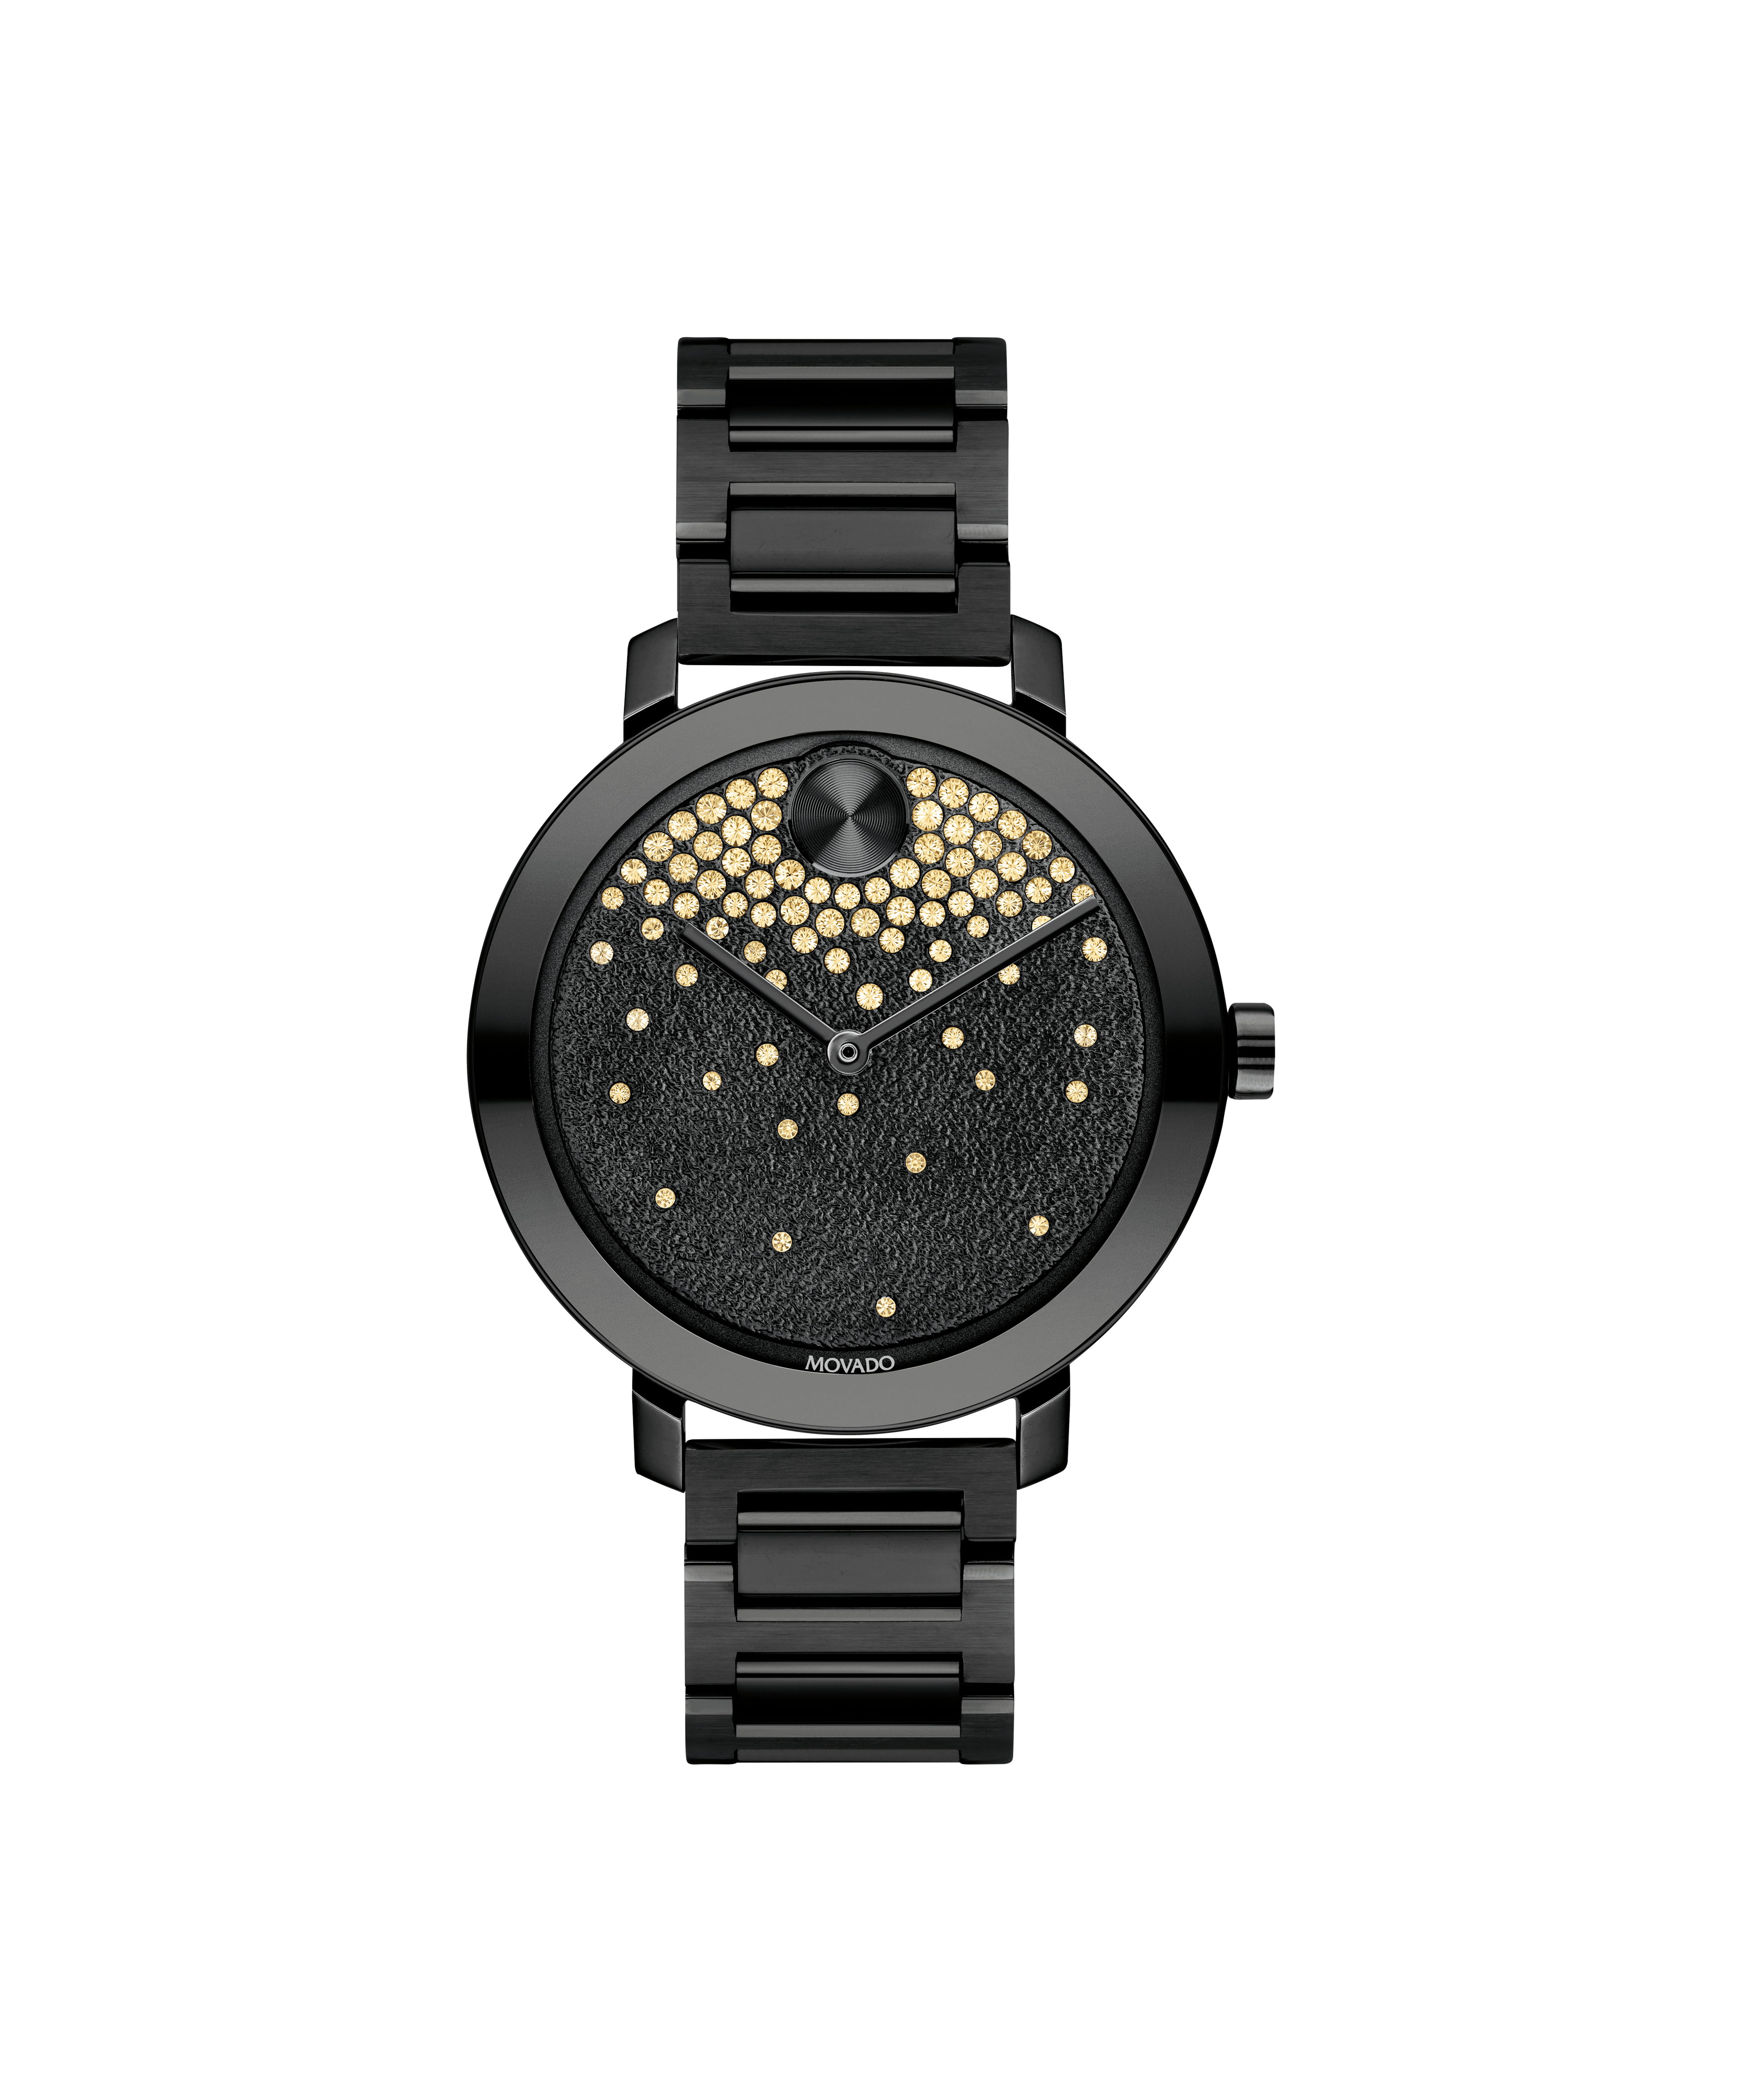 Movado Classic 5890639 14k 22mm watch